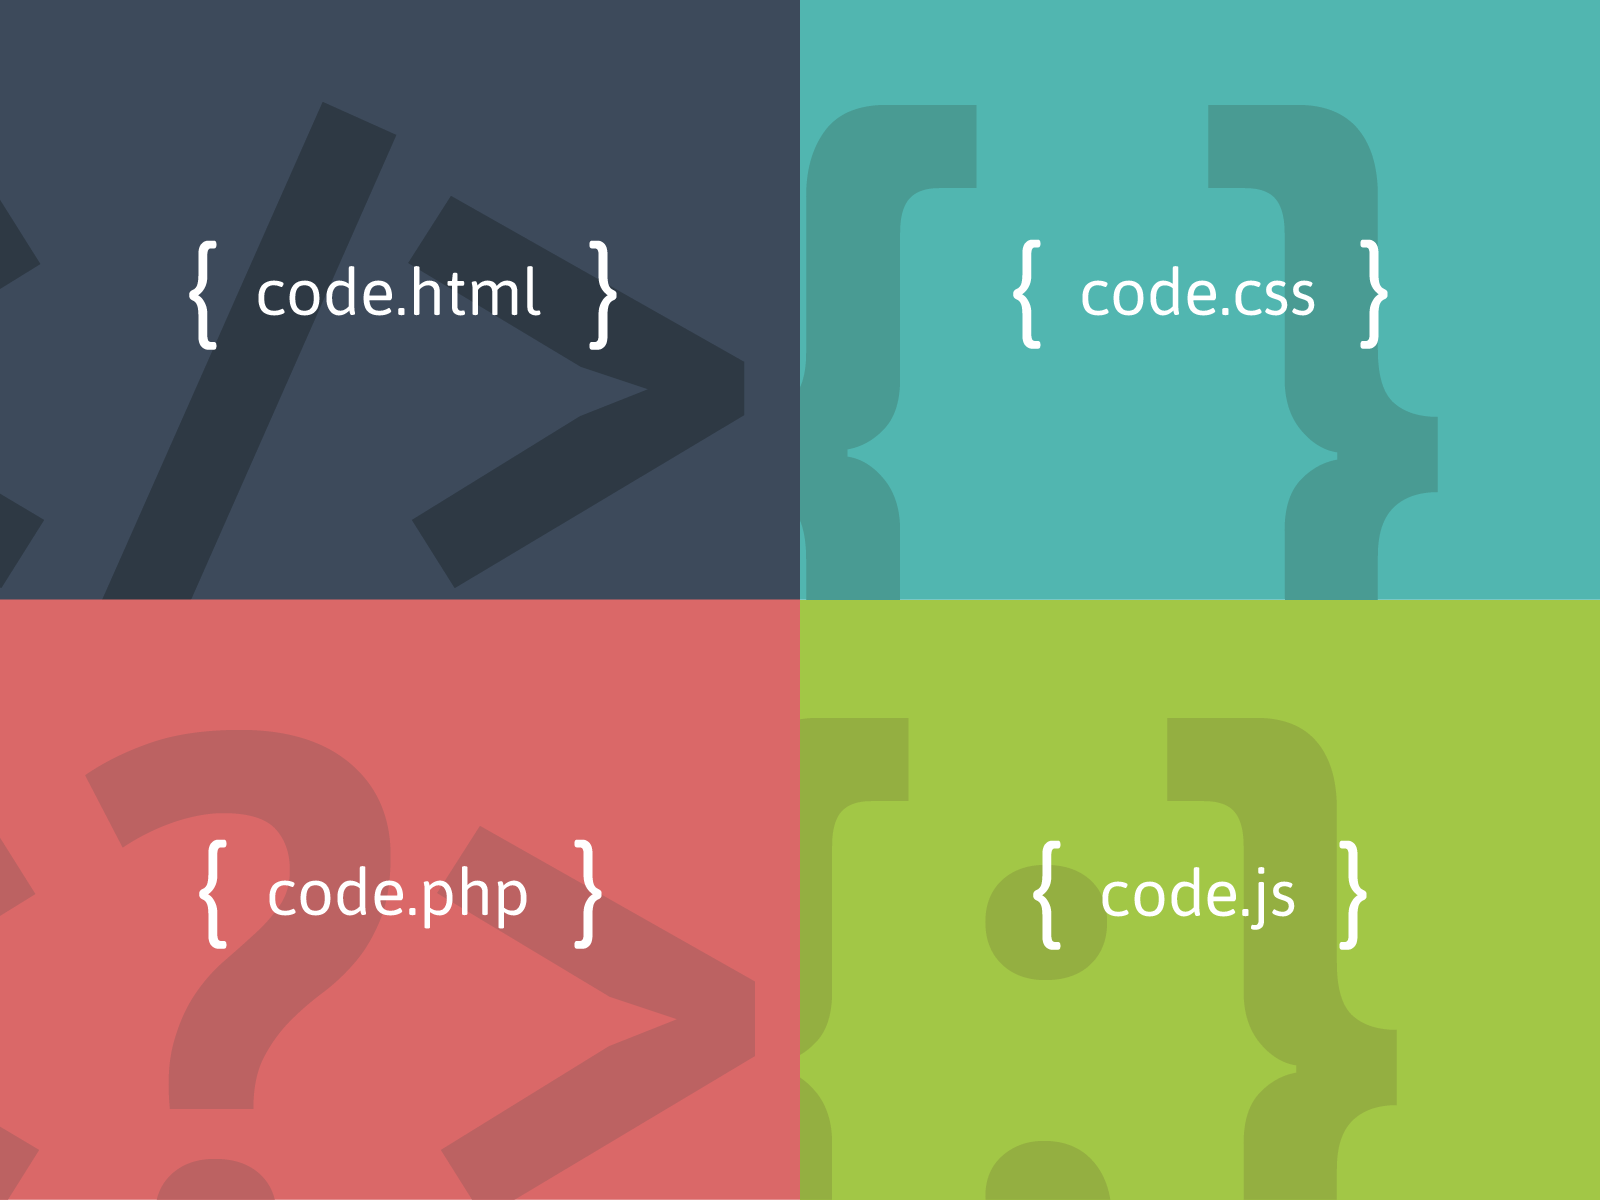 Сайт php html5. Html CSS js. Программирование html php CSS js. CSS язык программирования. Картинка html CSS js.